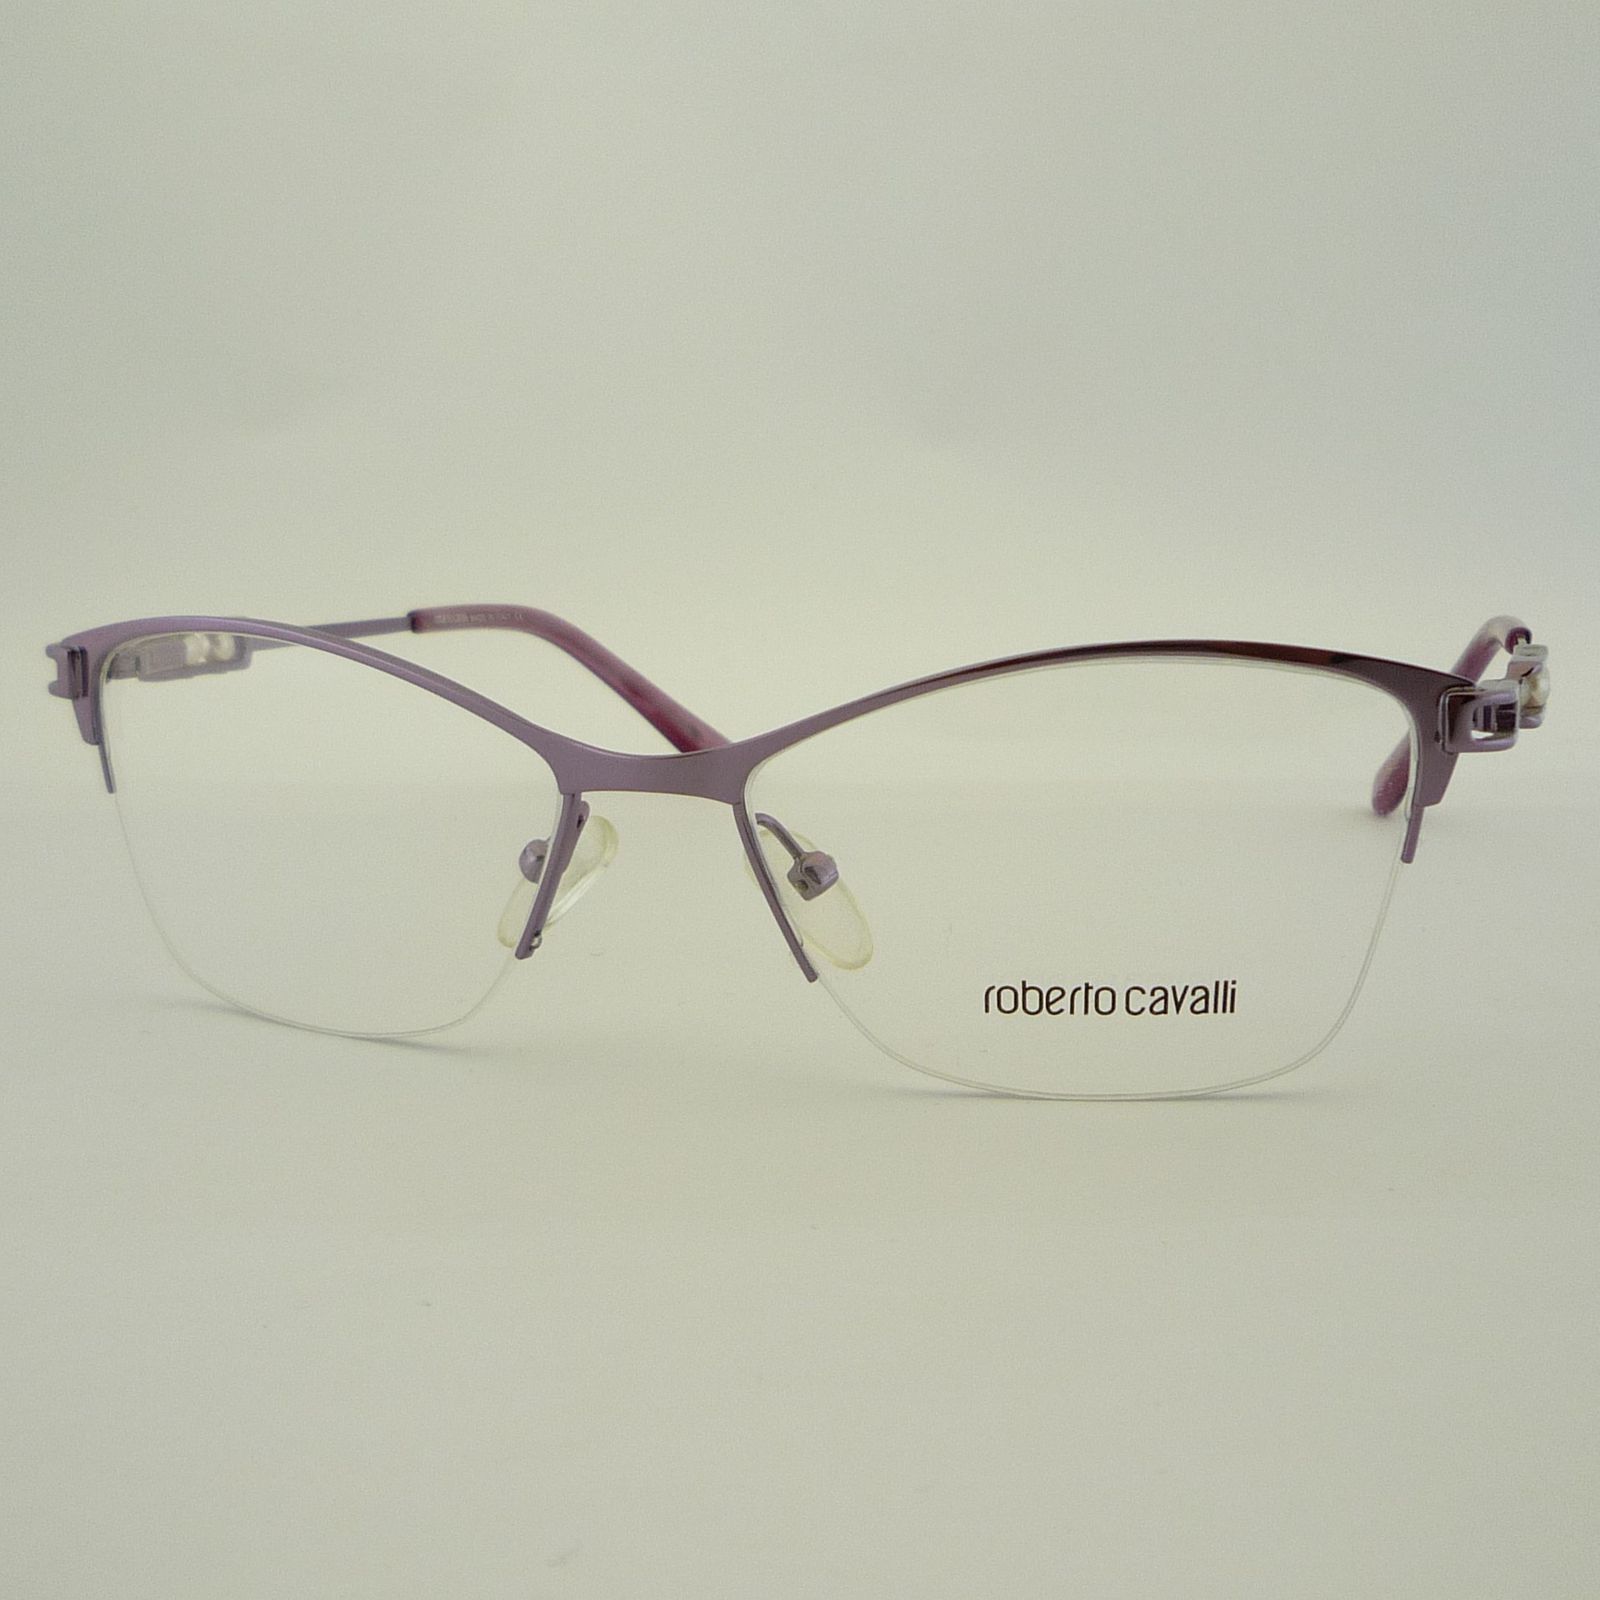 فریم عینک طبی زنانه روبرتو کاوالی مدل 45560187C6 -  - 3